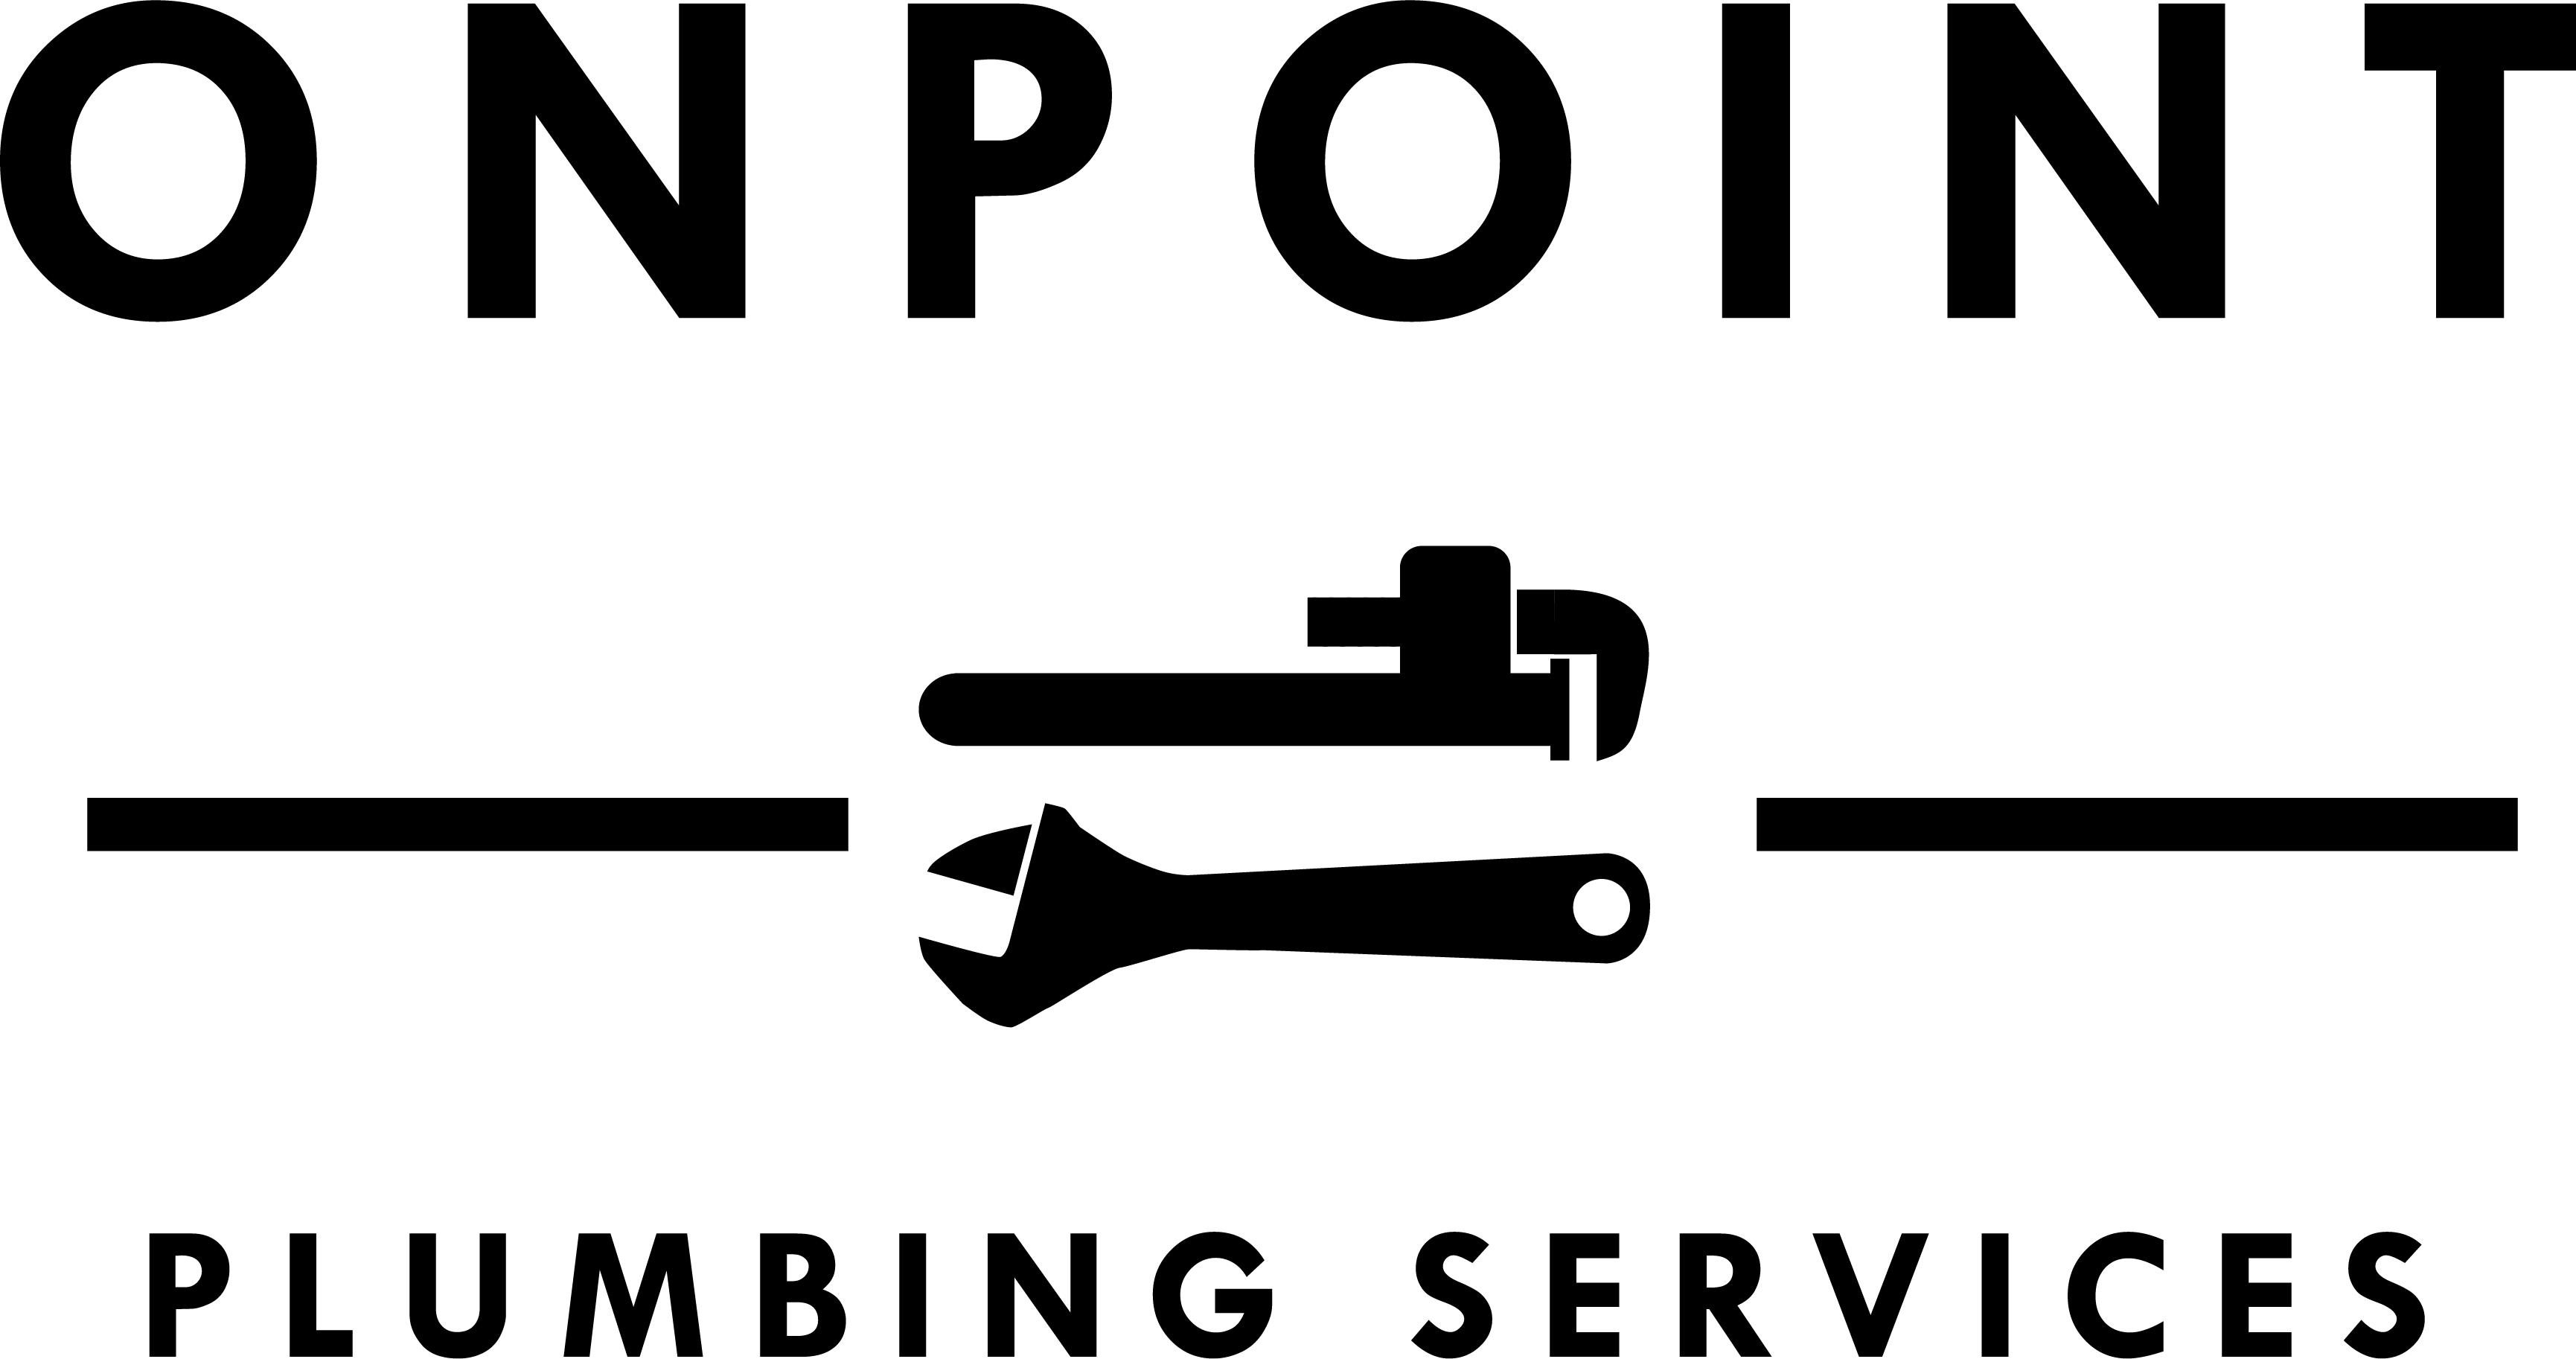 Onpoint logo black